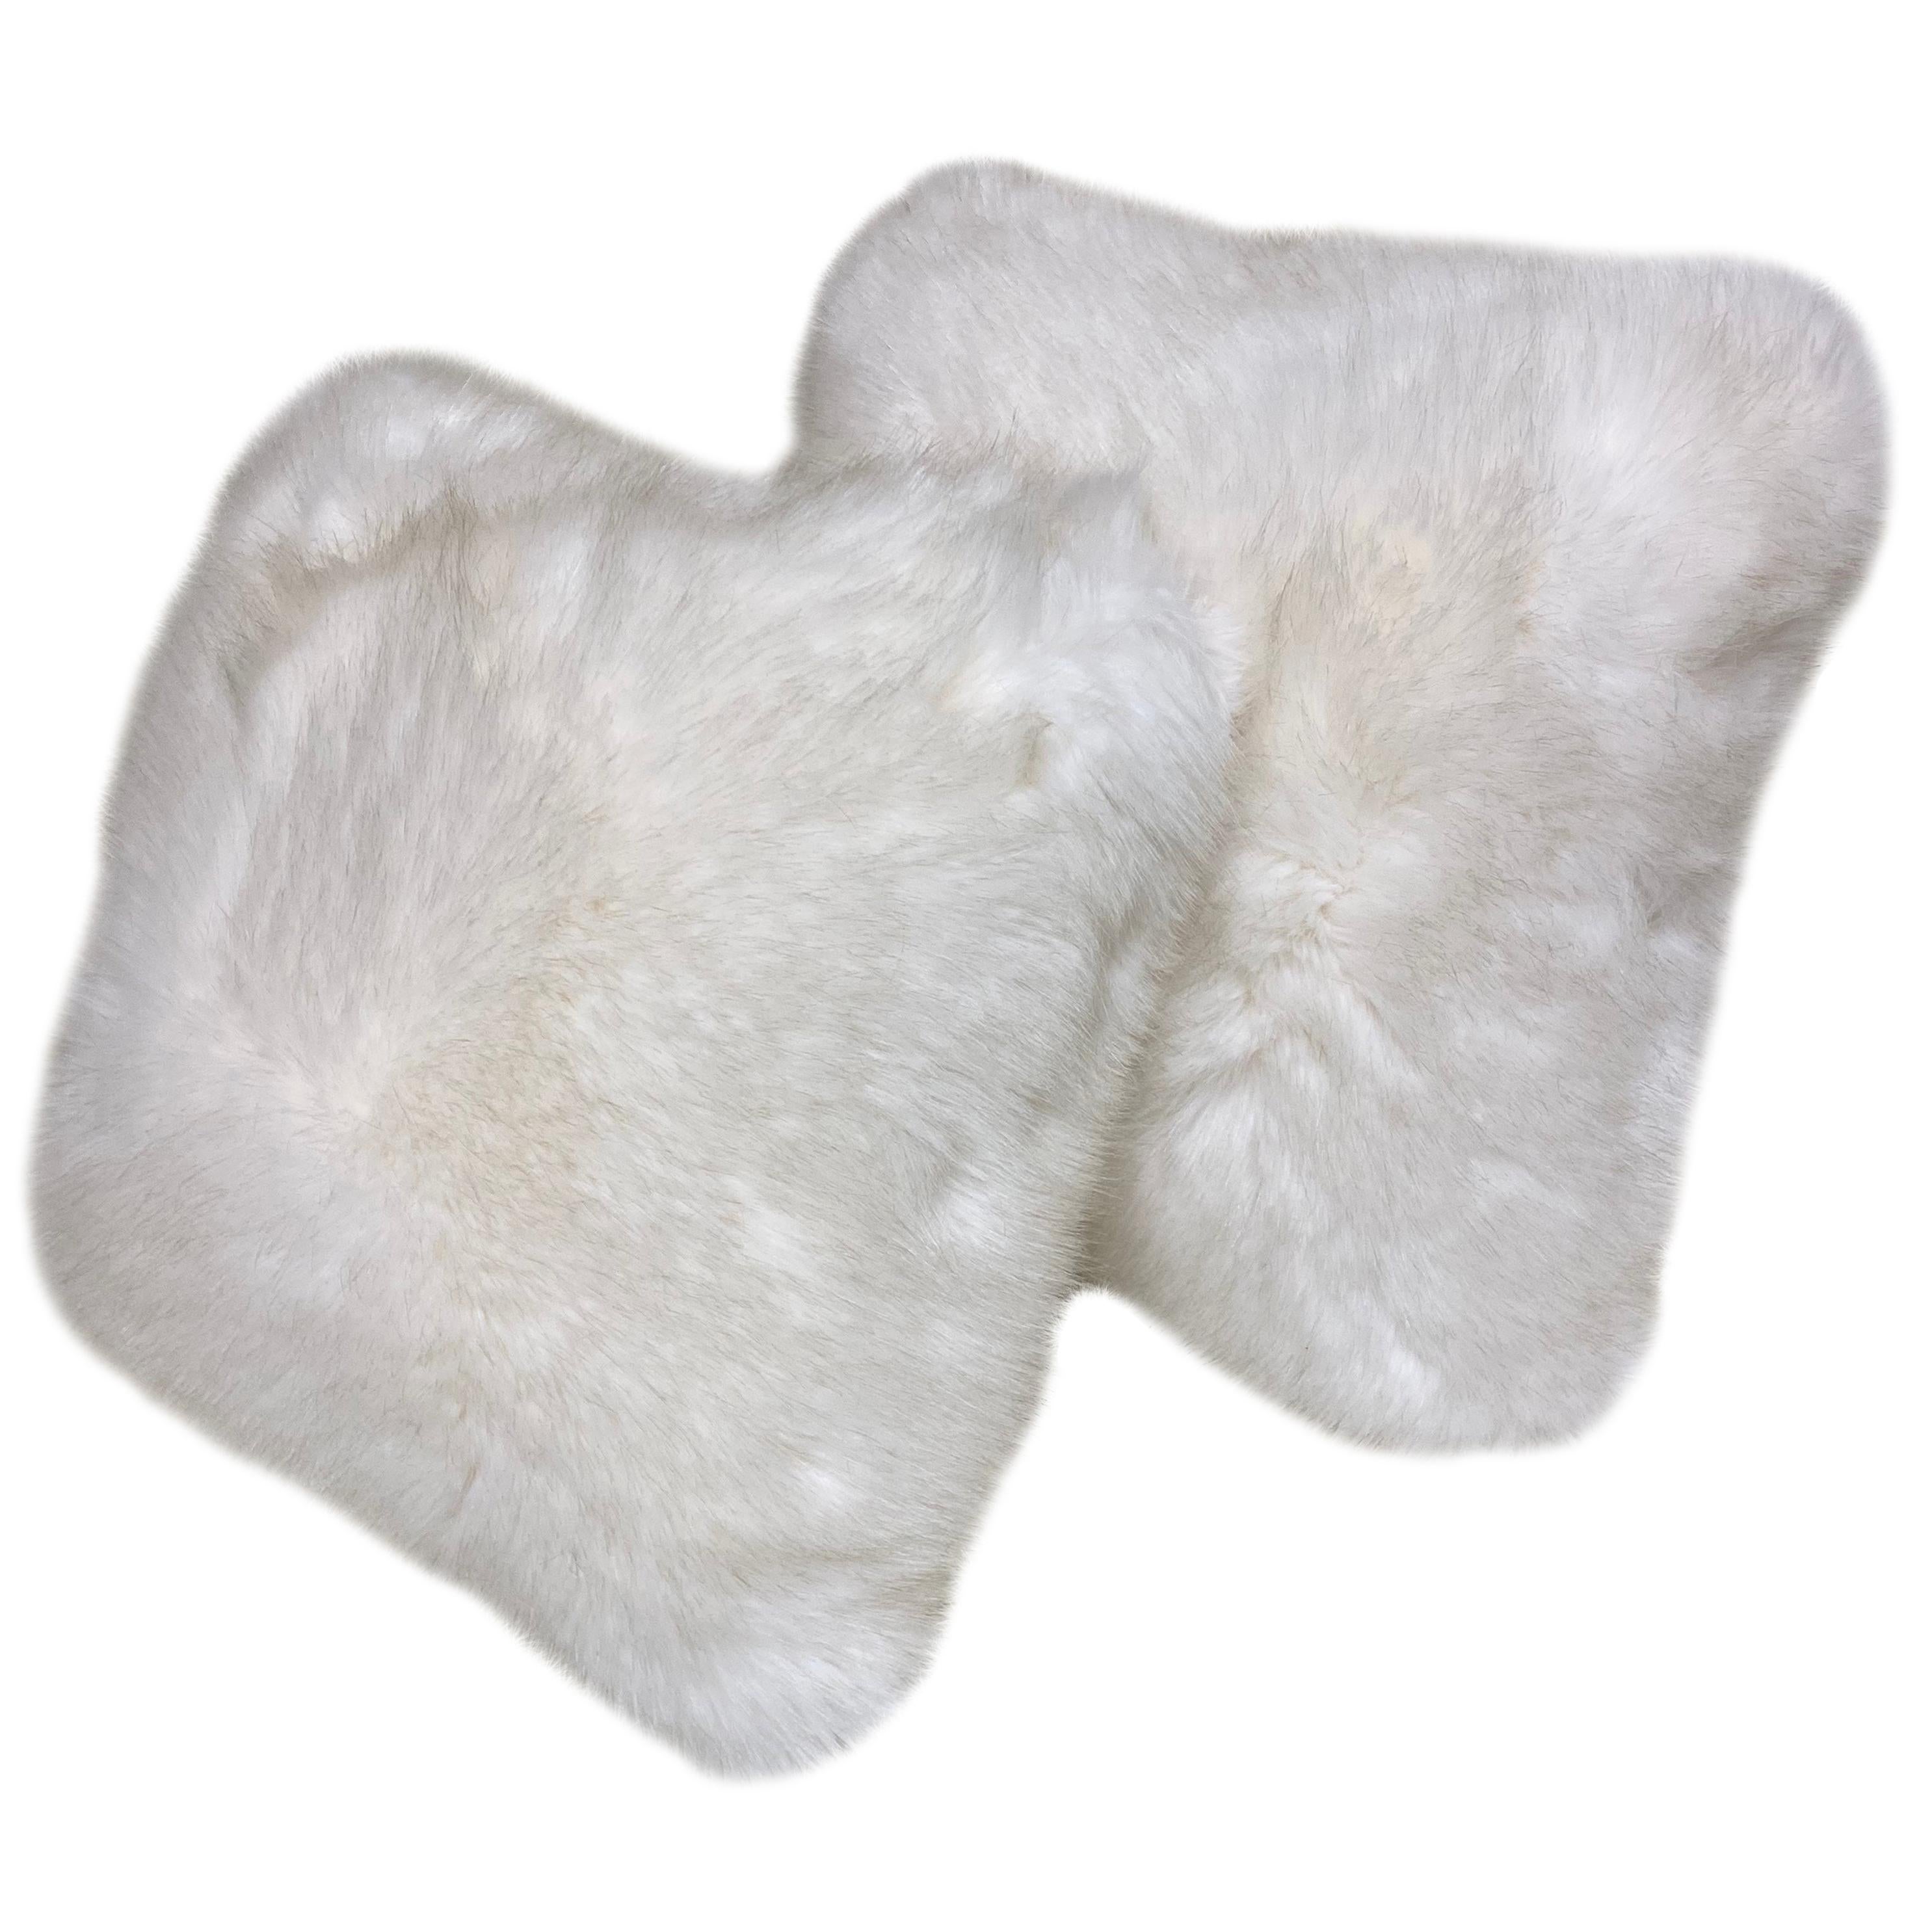 Pair of Simulated "Polar Bear" Fur Cushions For Sale